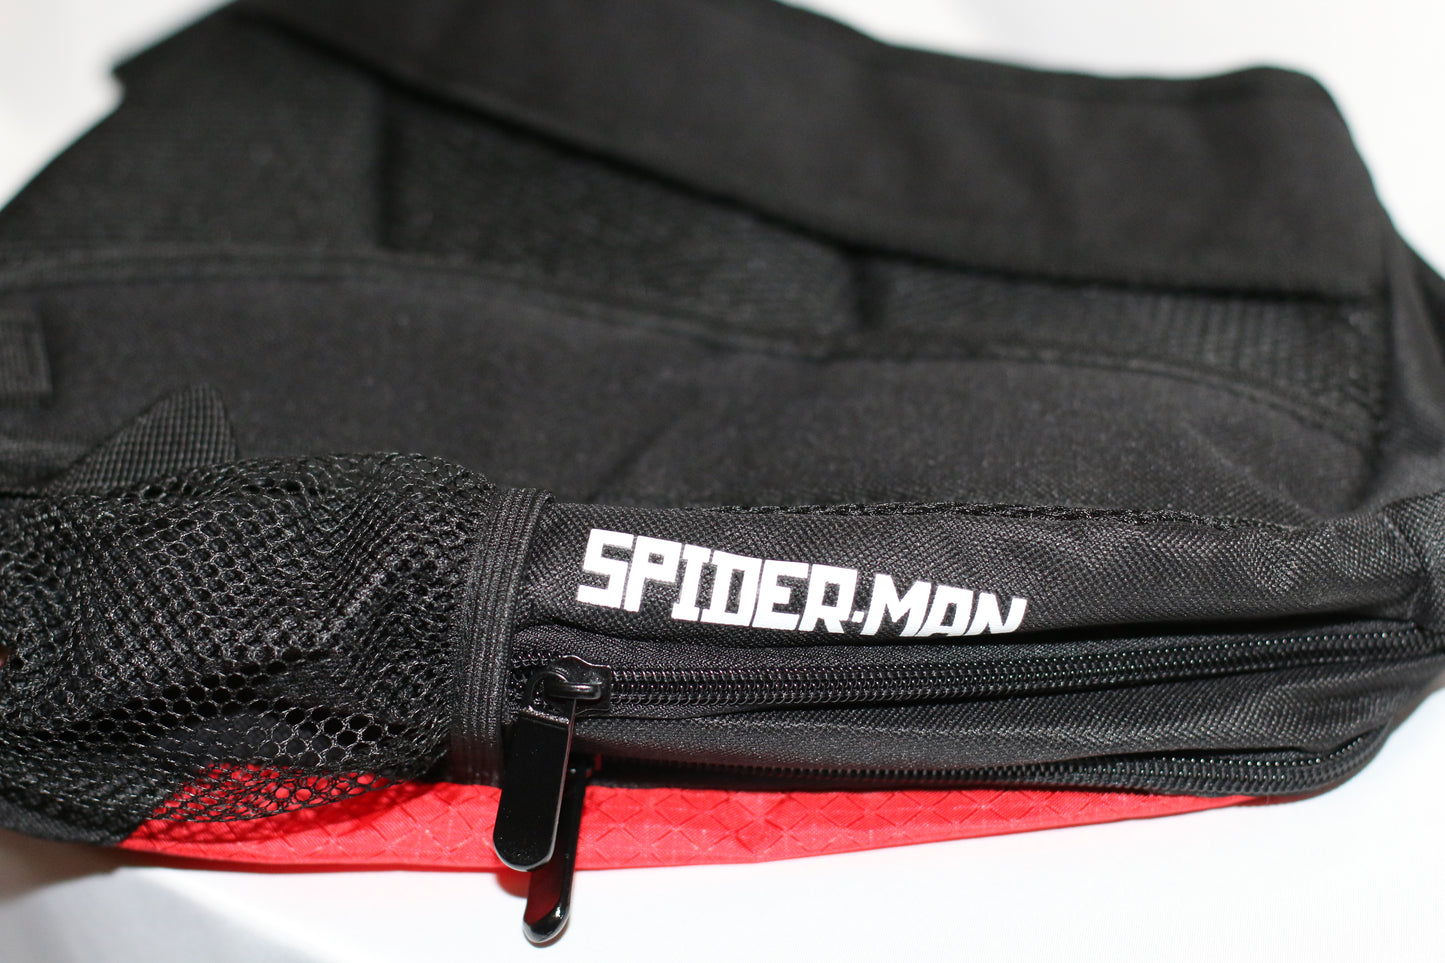 Boys' Spider-Man Mini Backpack - Black/Red